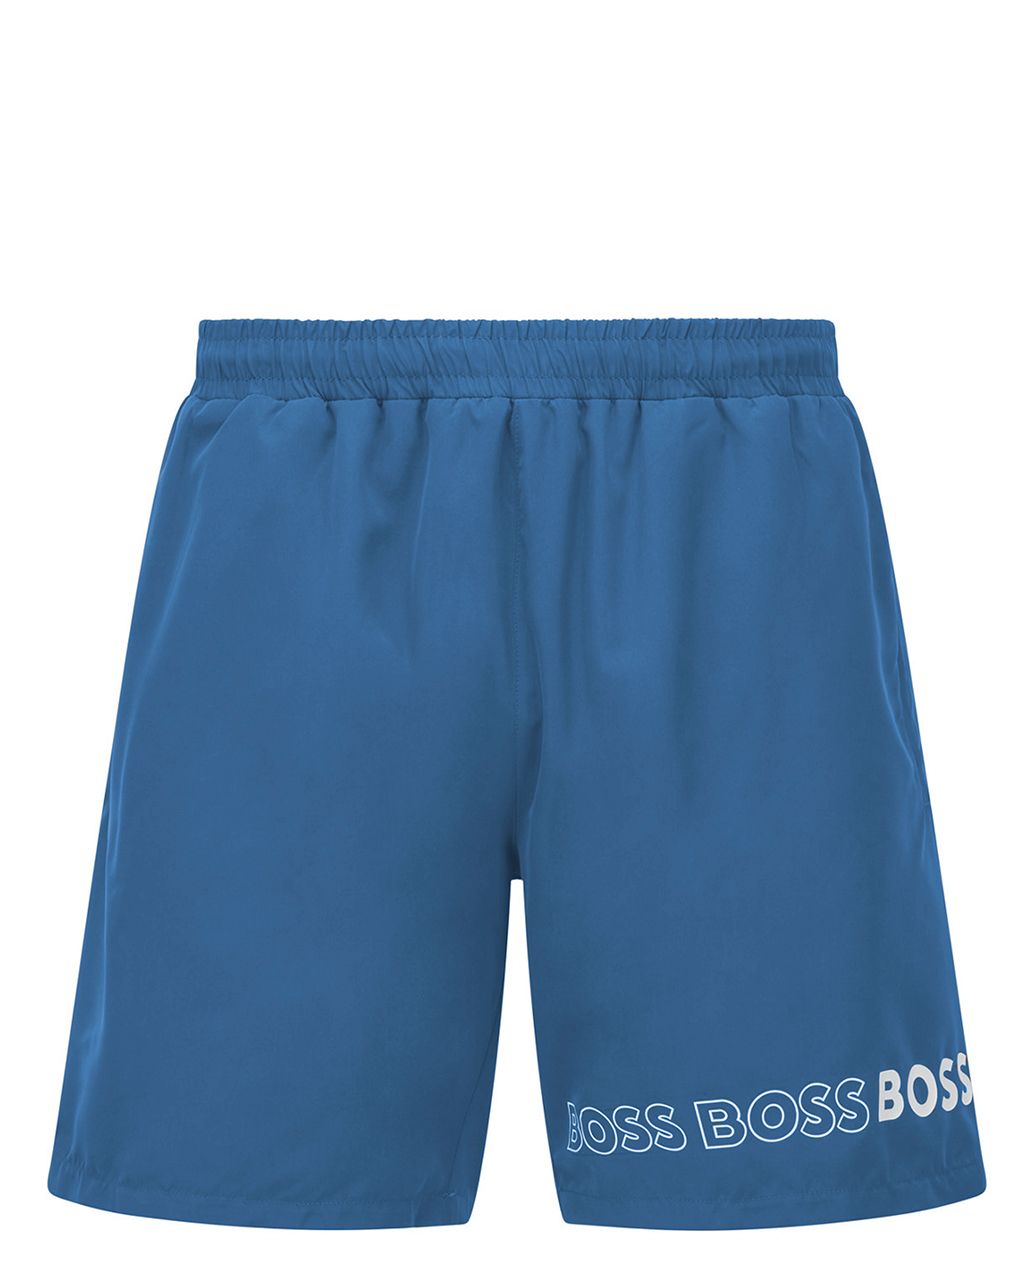 Hugo Boss Menswear Dolphin Zwemshort Blauw 076949-001-L